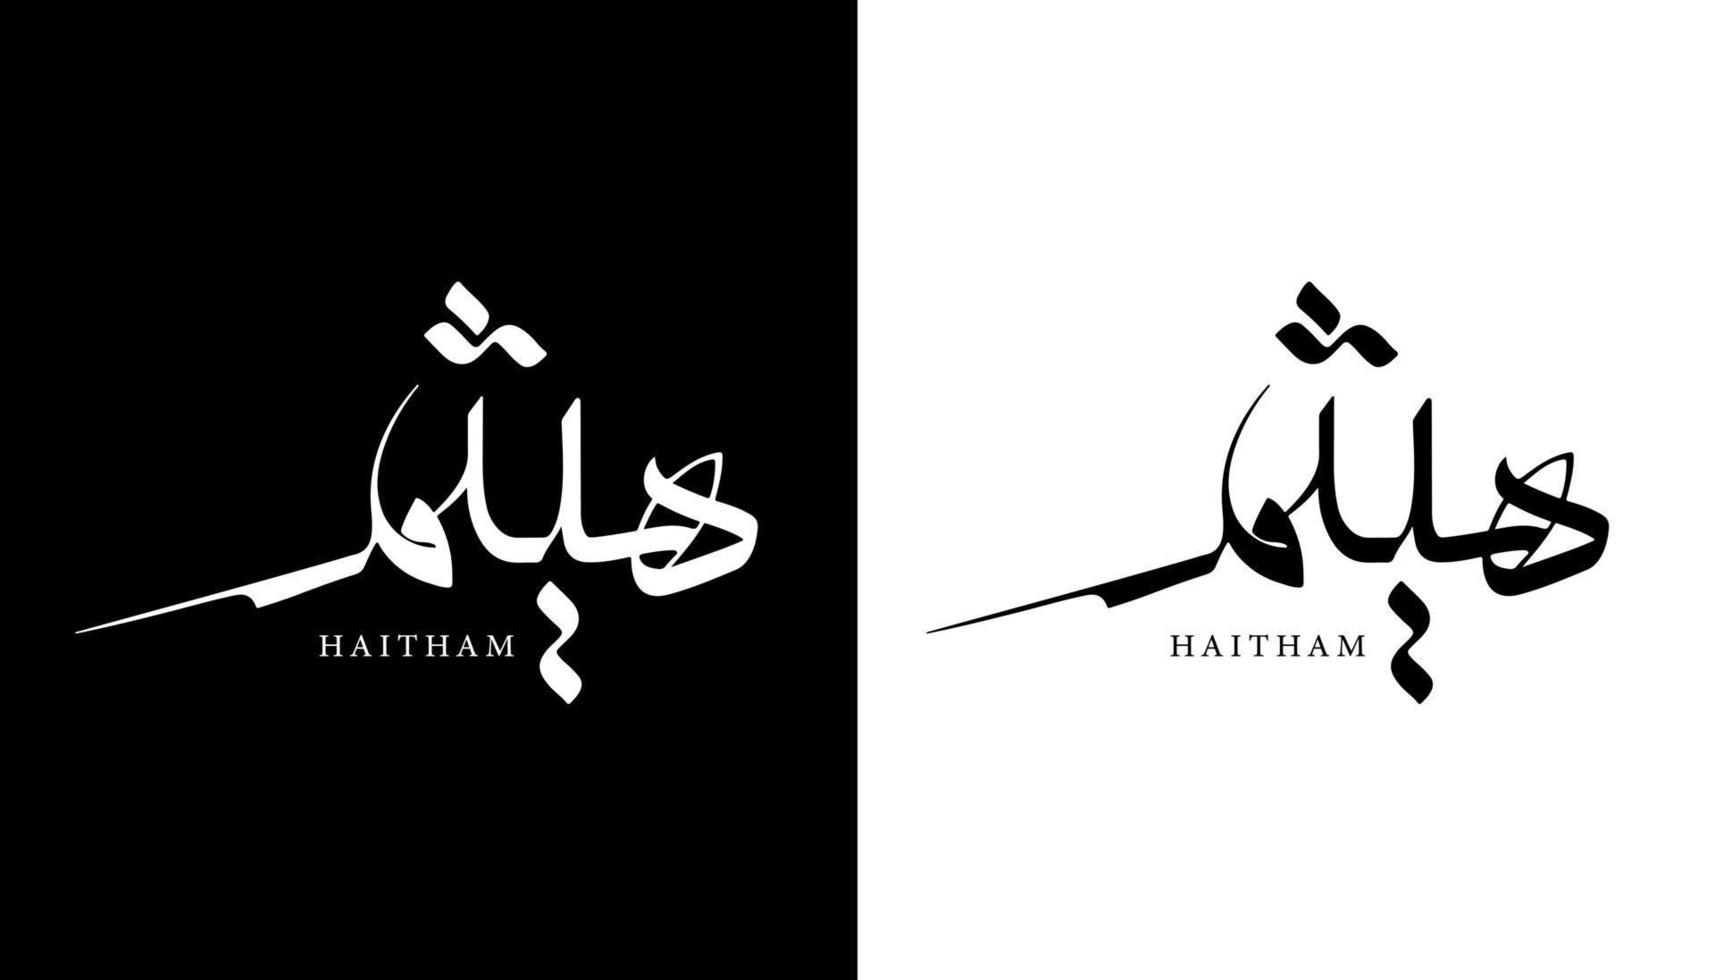 nombre de caligrafía árabe traducido 'haitham' letras árabes alfabeto fuente letras islámicas logo vector ilustración